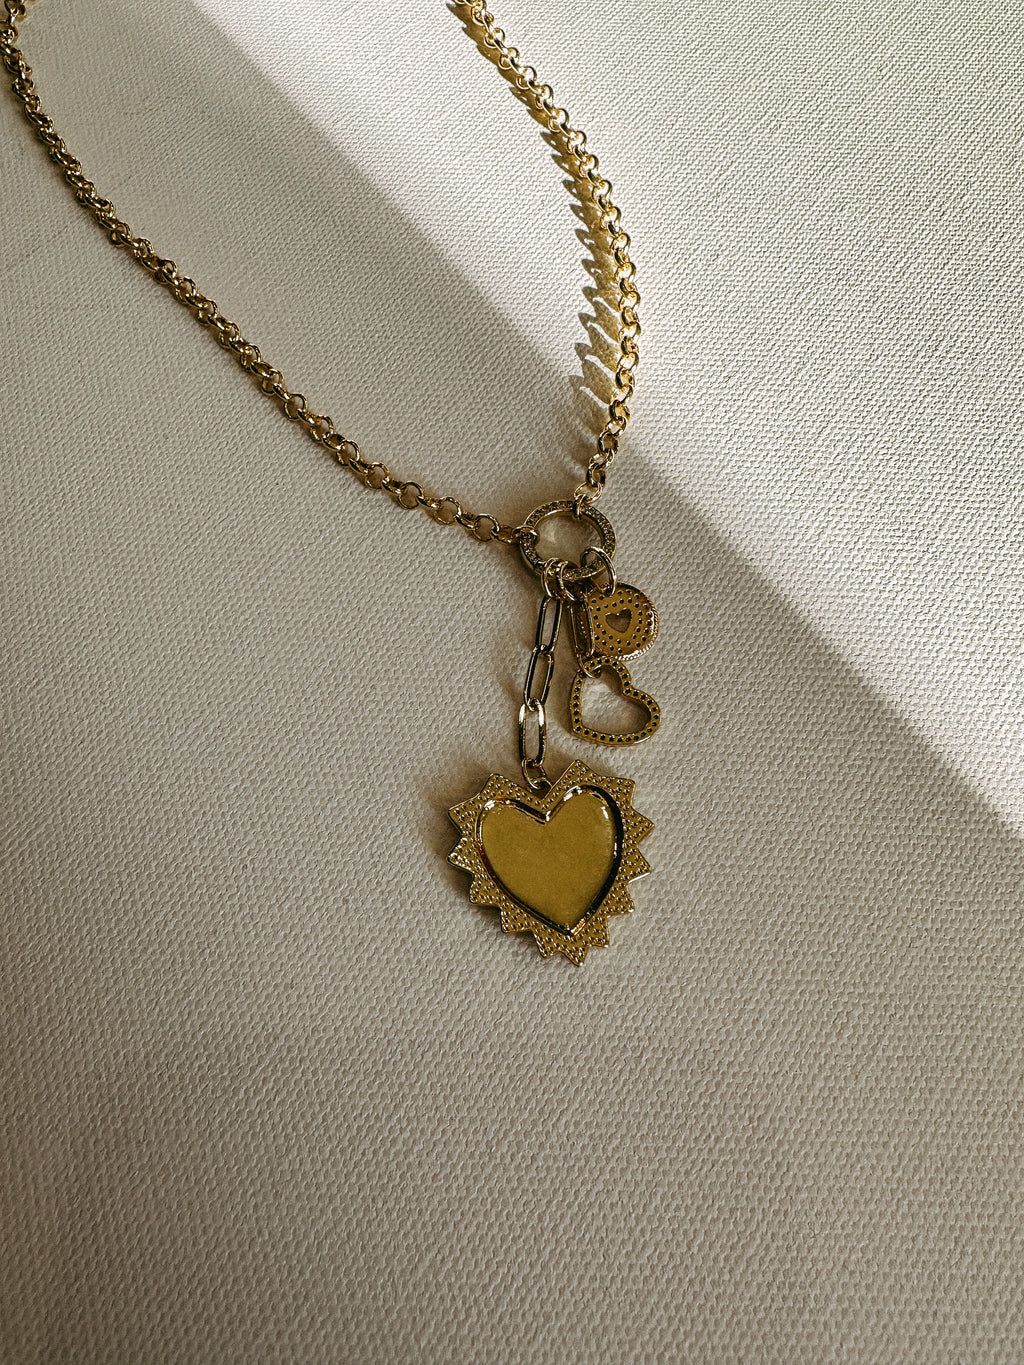 all love heart charm necklace | Etta+East